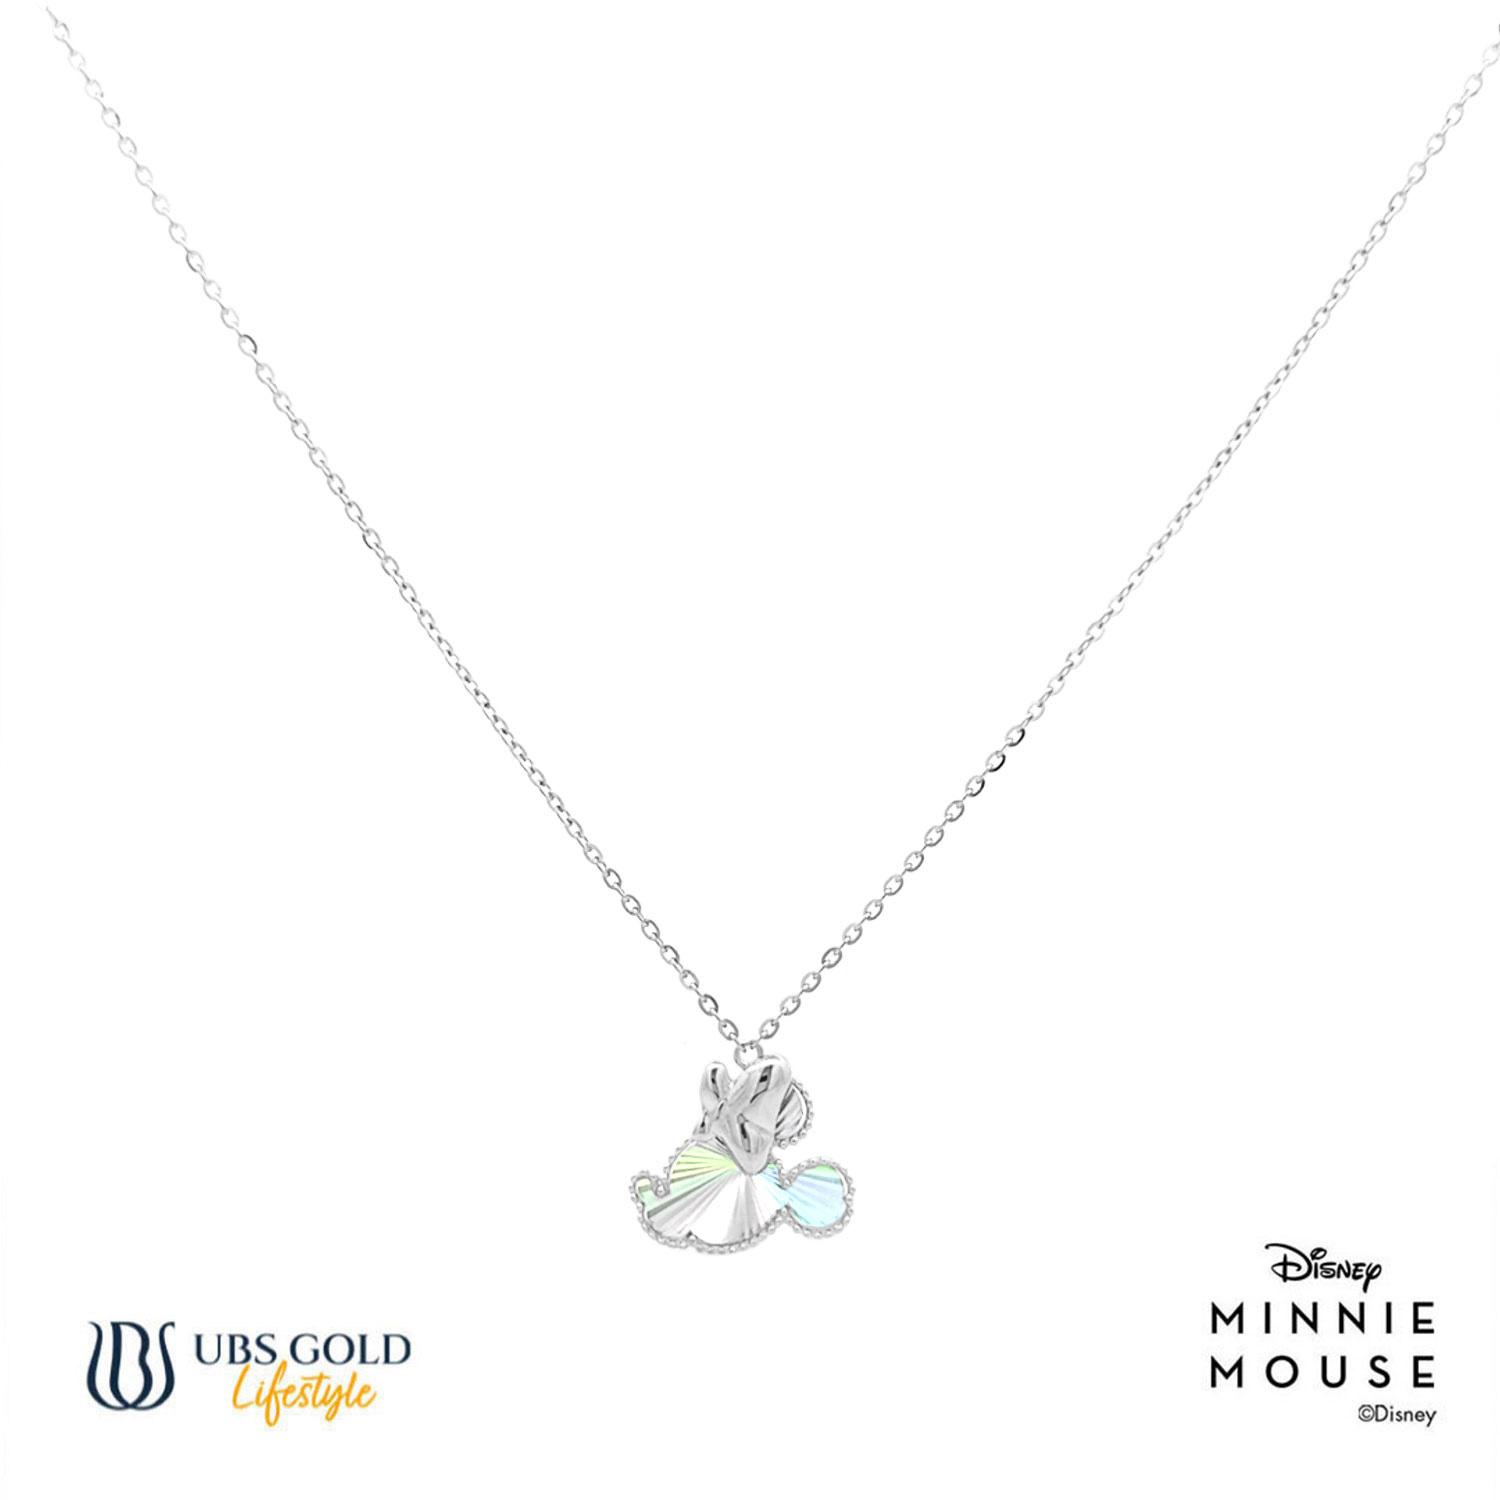 UBS Gold Kalung Emas Disney Minnie Mouse Rainbow - Kky0502 - 17K